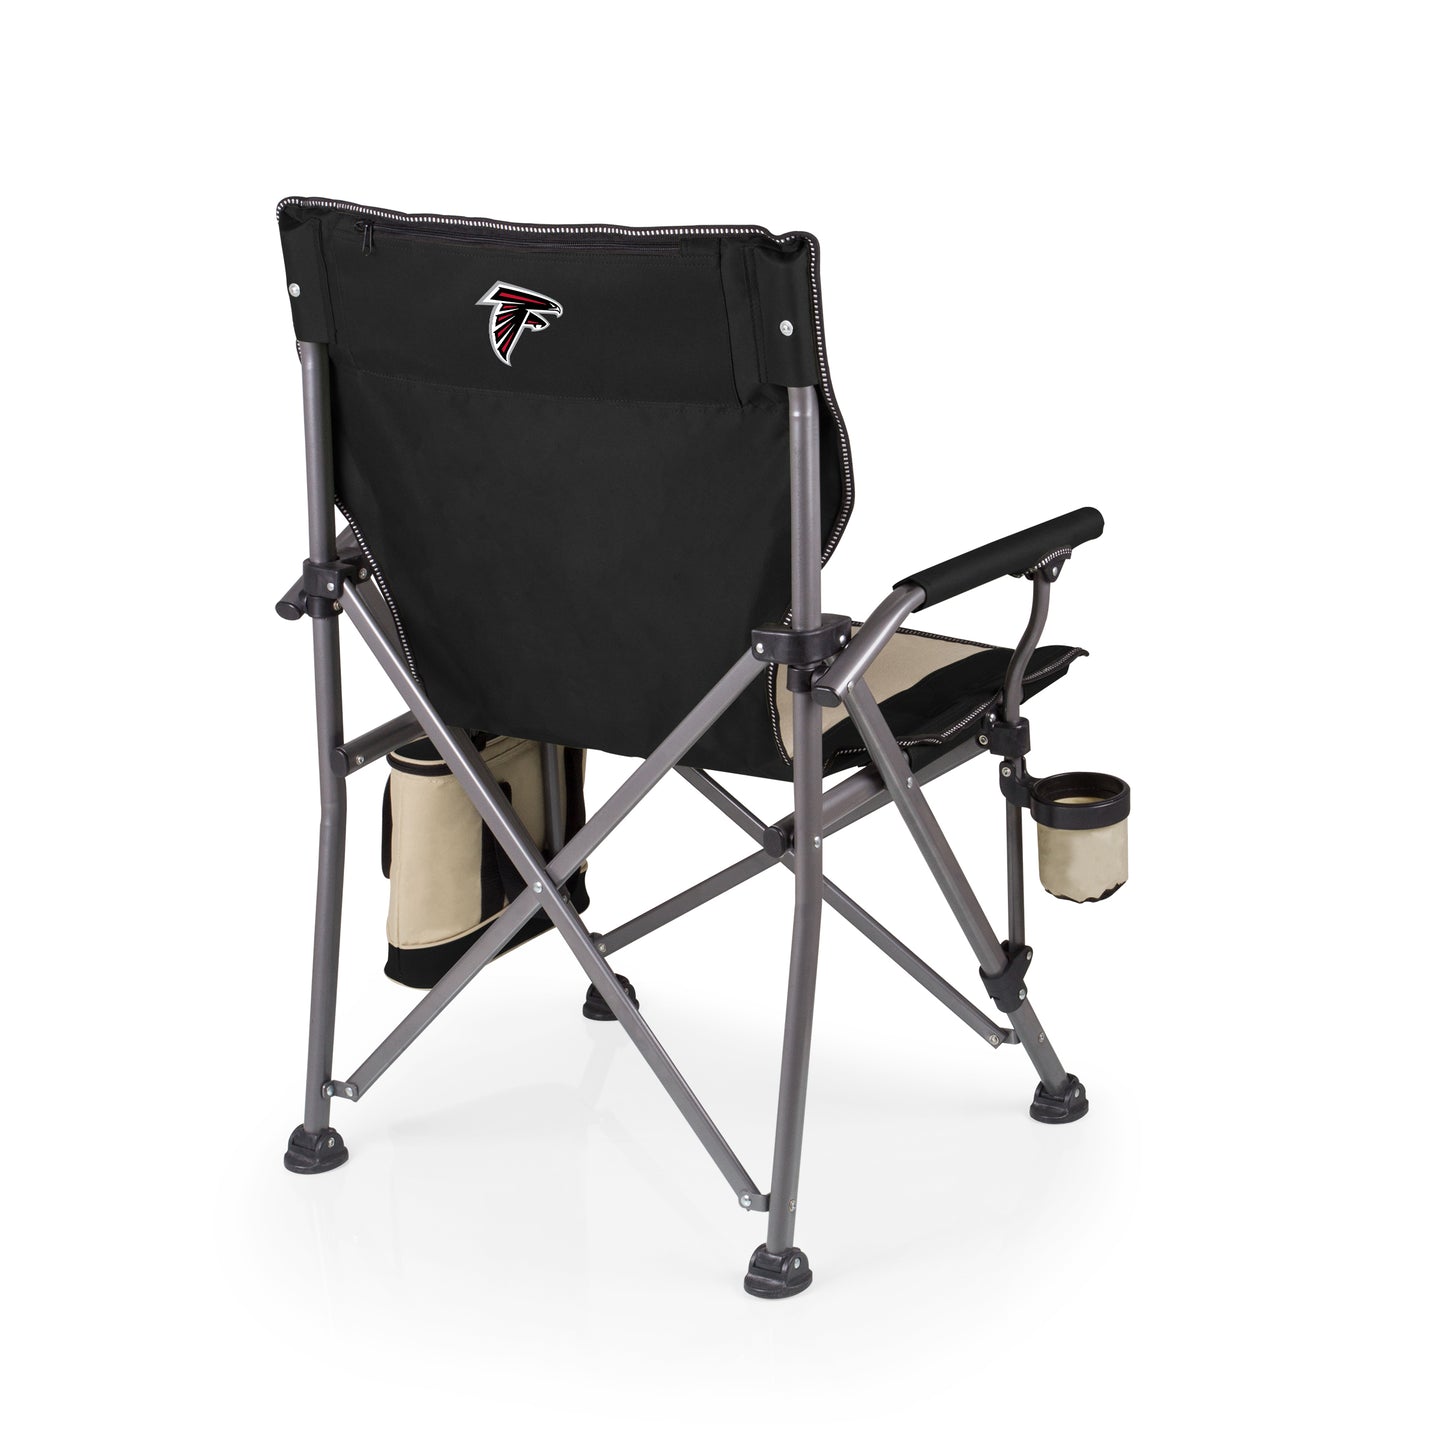 Atlanta Falcons - Outlander Folding Camping Chair with Cooler